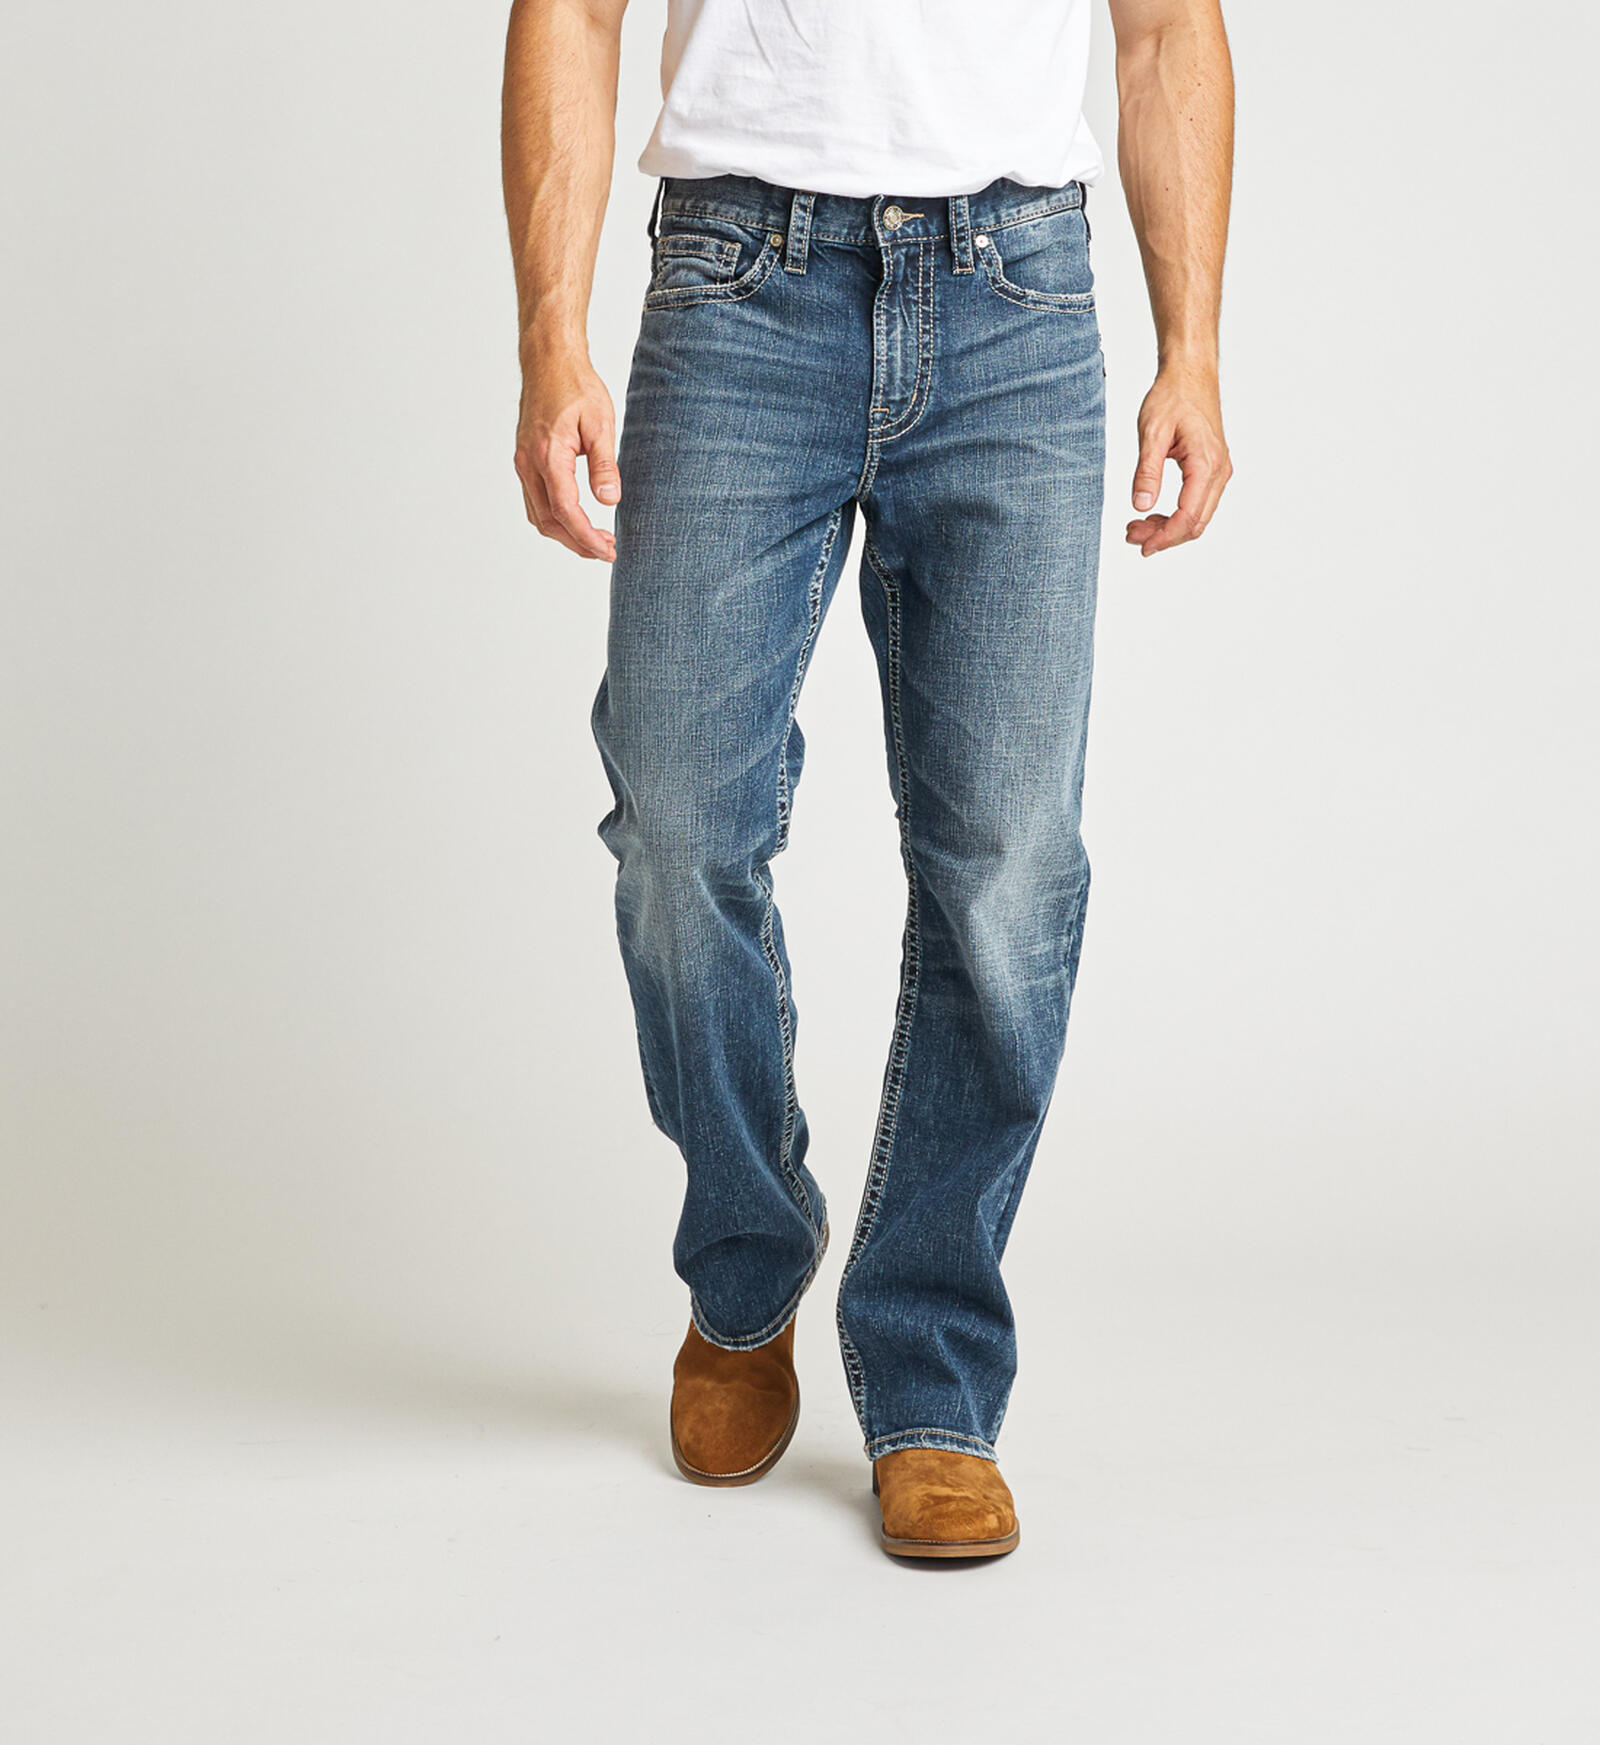 Silver Jeans Grayson Easy Modern Fit Straight Leg Jeans, Men's Pants